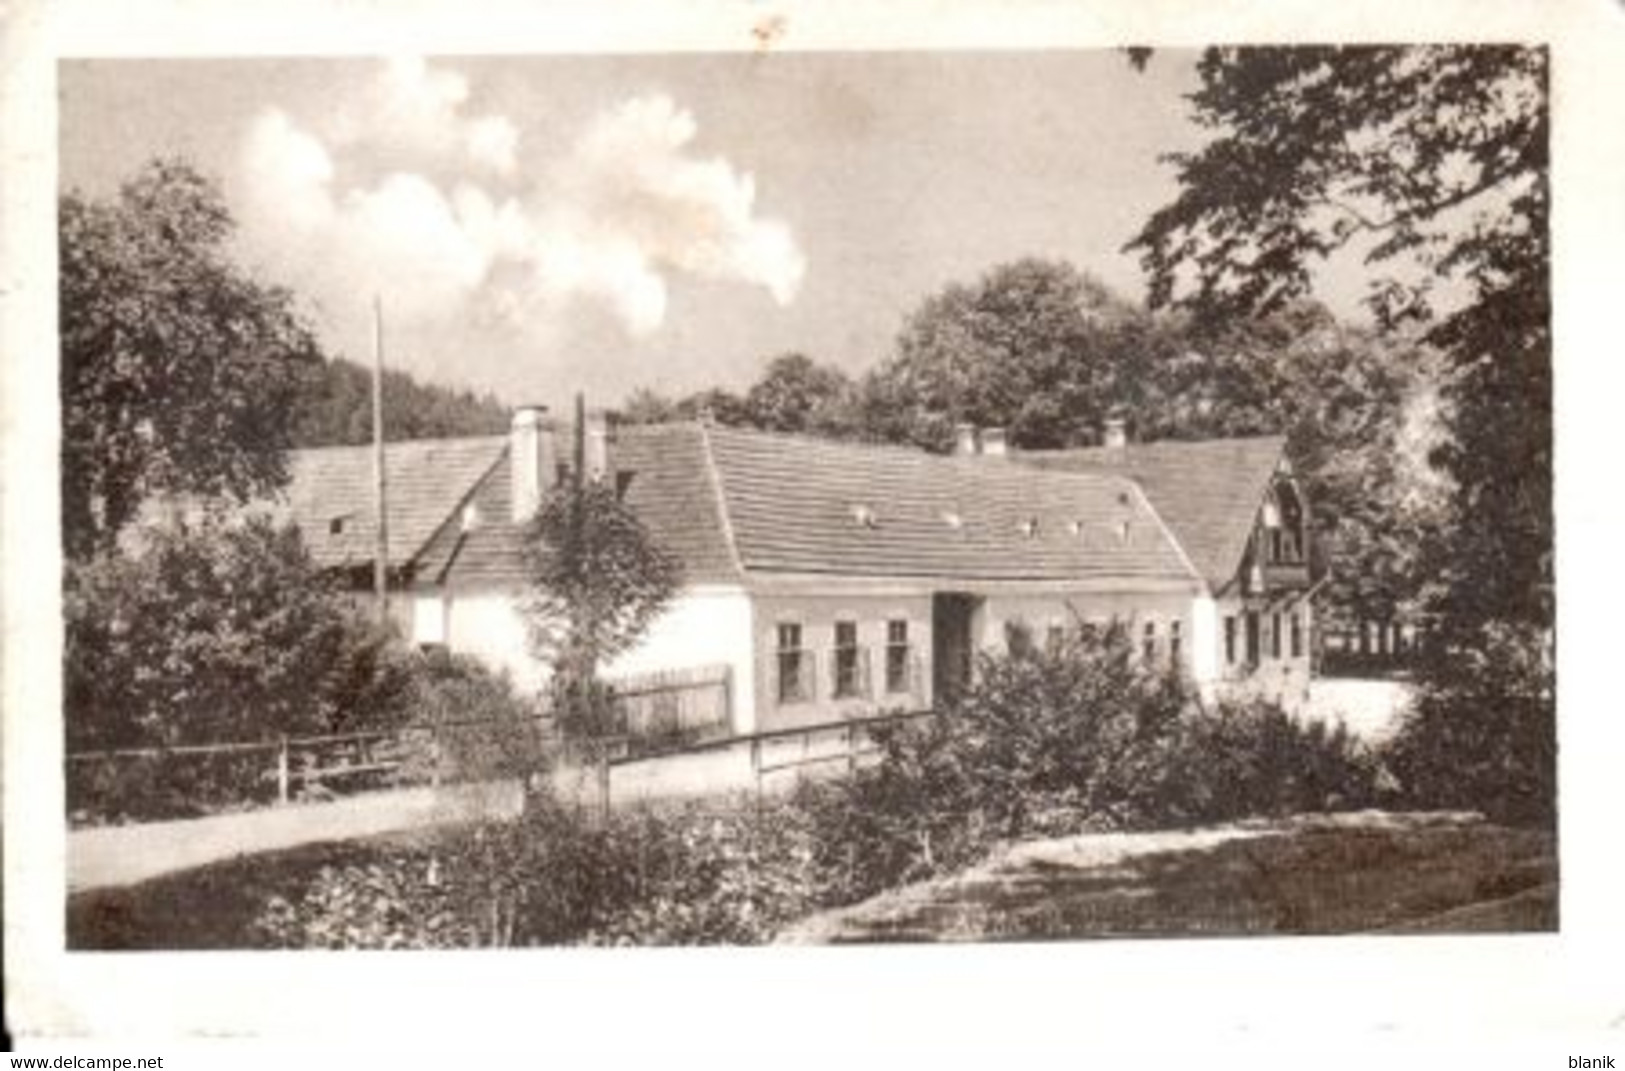 A - Kronstein Bei Rekawinkel - A 1929 95 001 - Tulln